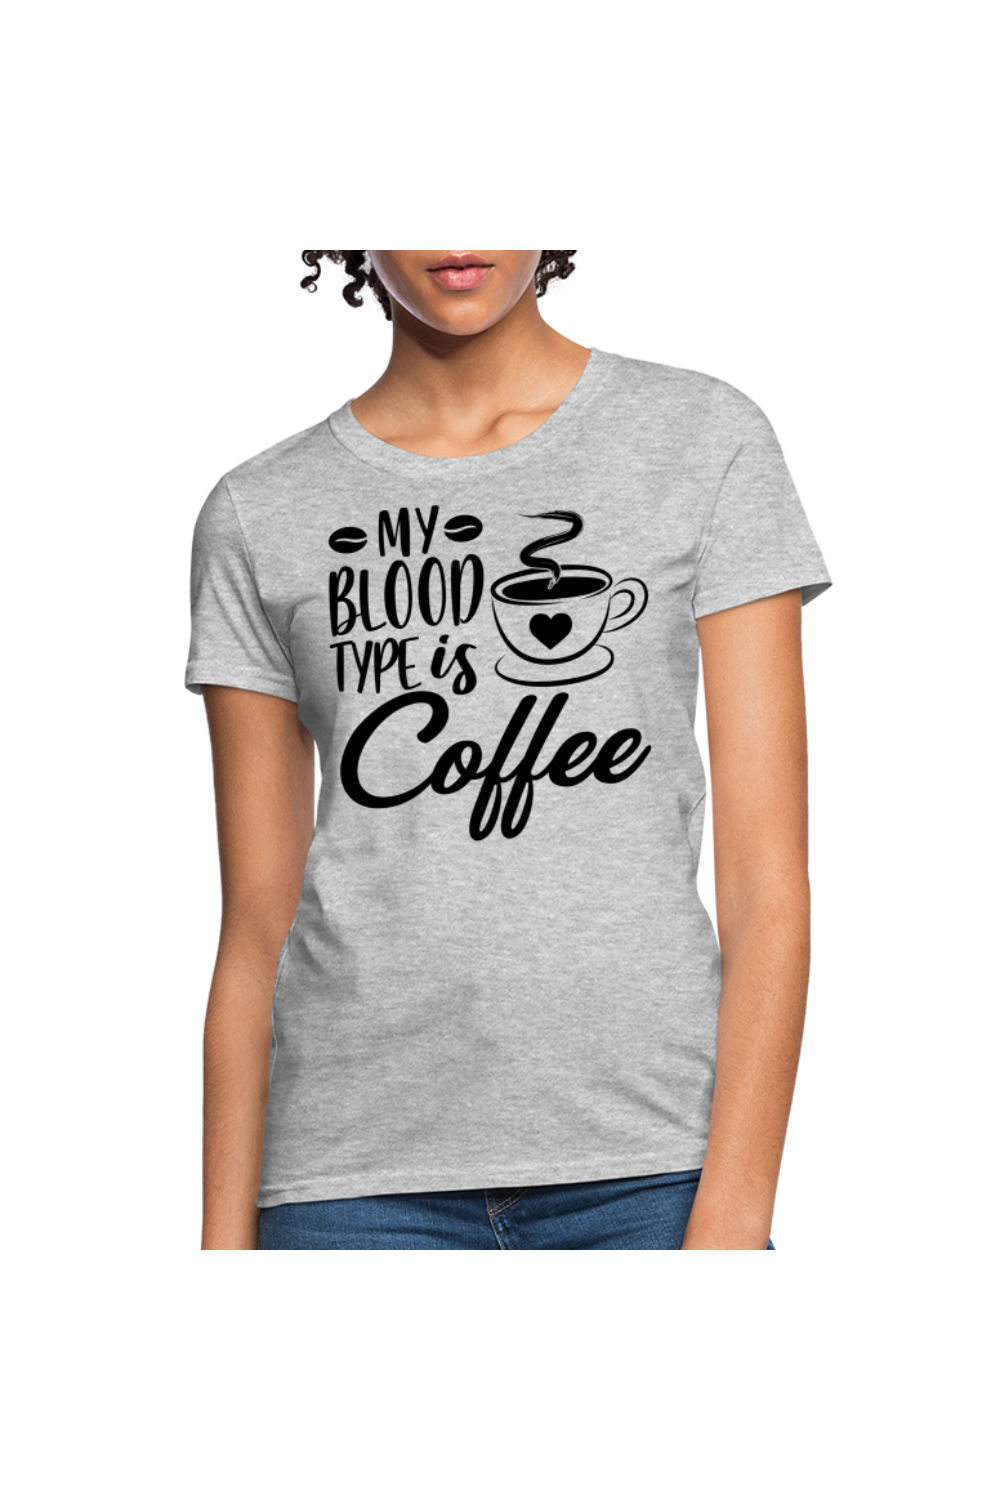 My Blood Type Is Coffee Women's Nurse T-Shirt - heather gray